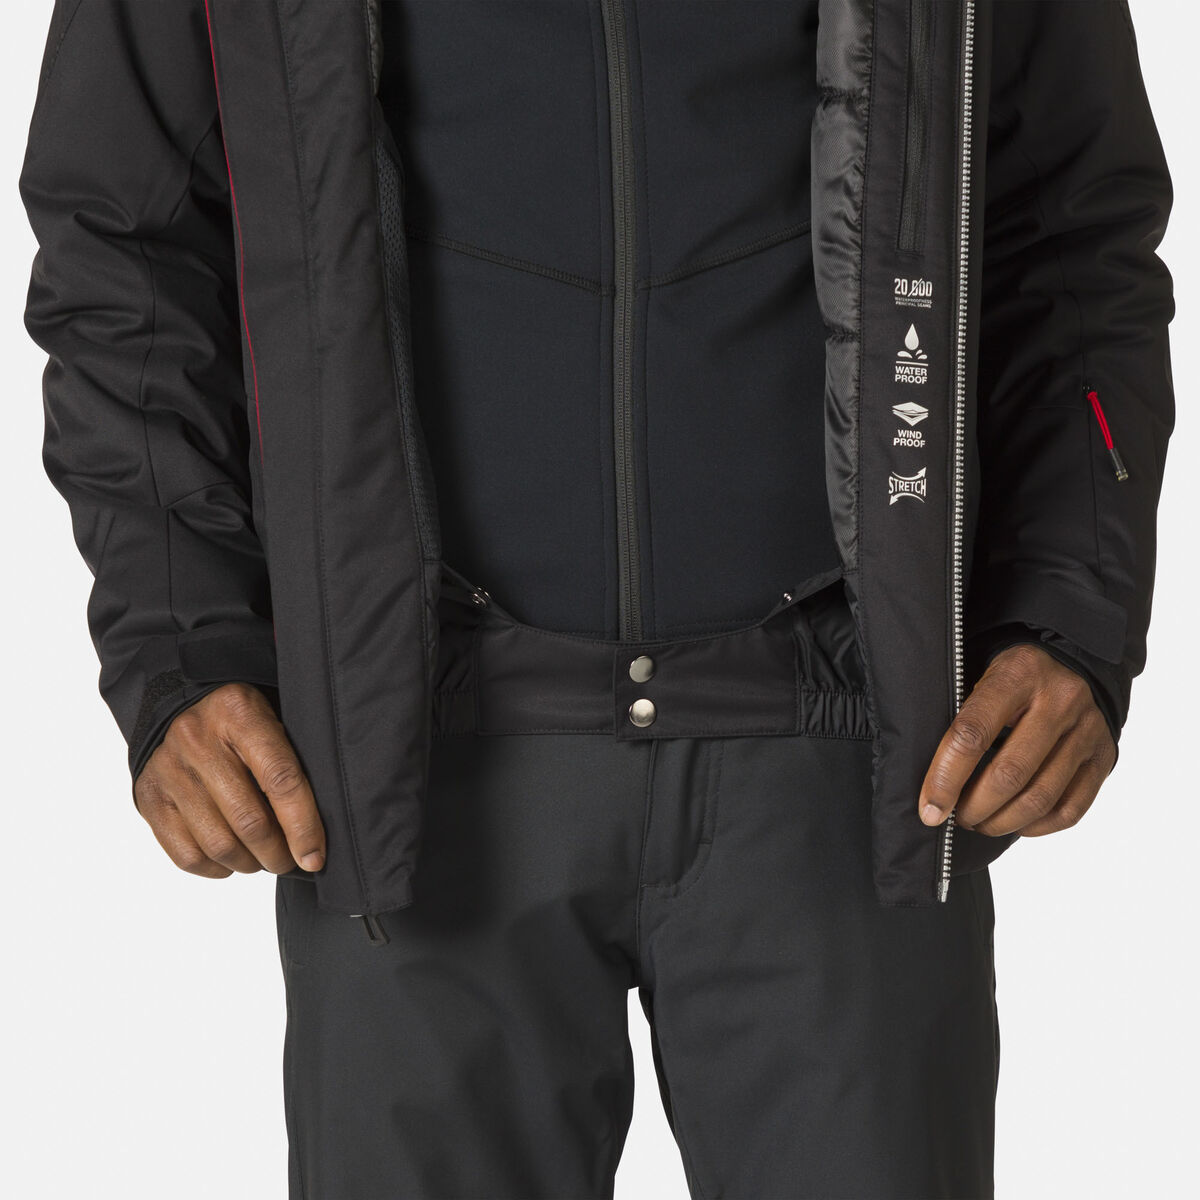 Rossignol Men's All Speed Ski Jacket black